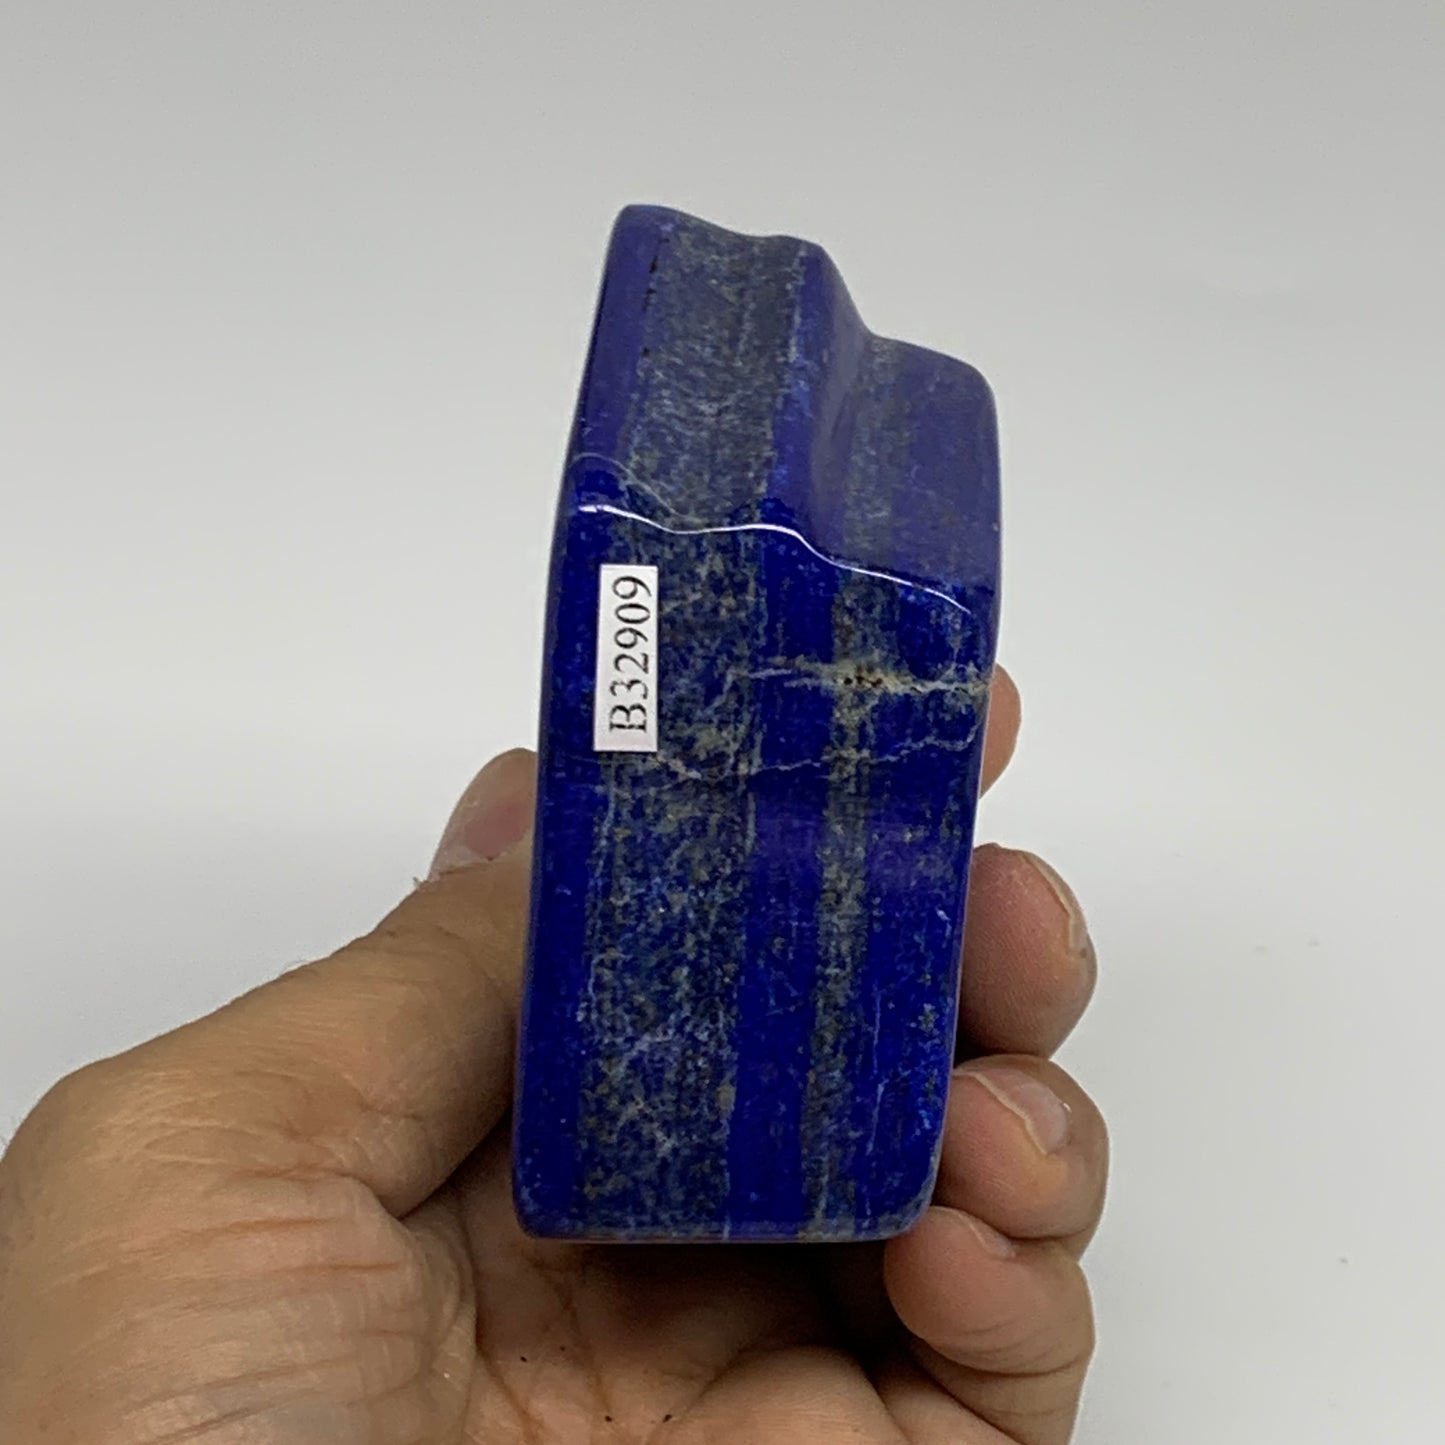 0.78 lbs, 3.4"x2"x1.4" Natural Freeform Lapis Lazuli from Afghanistan, B32909